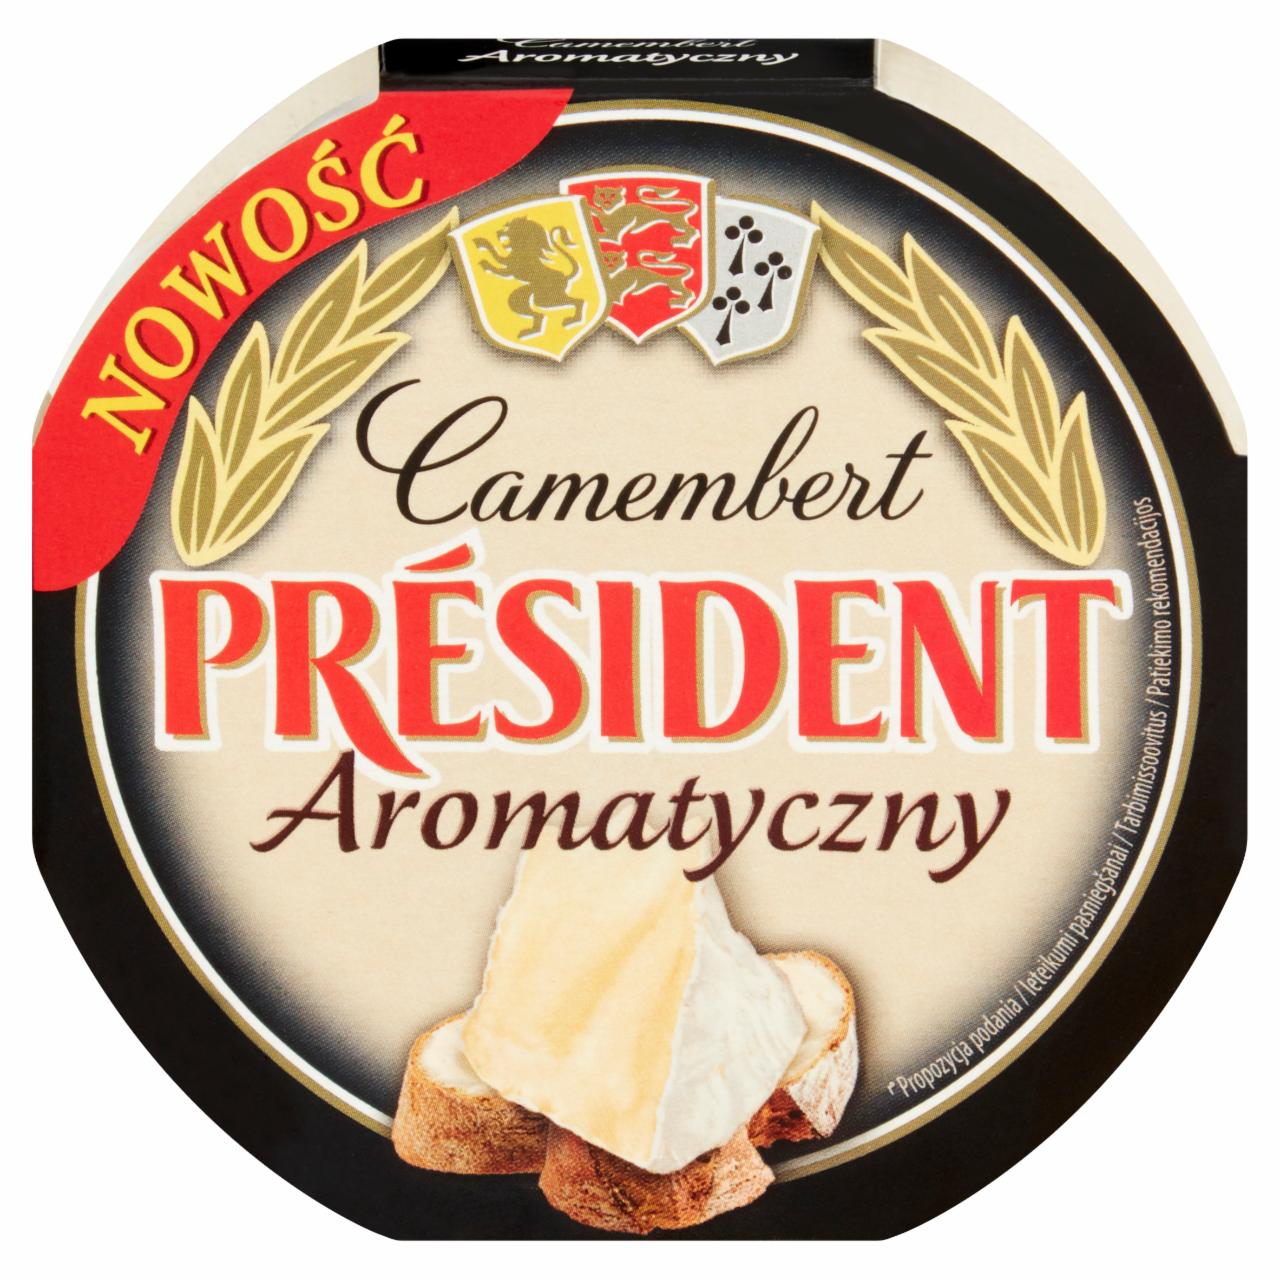 Photo - Président Aromatic Camembert Cheese